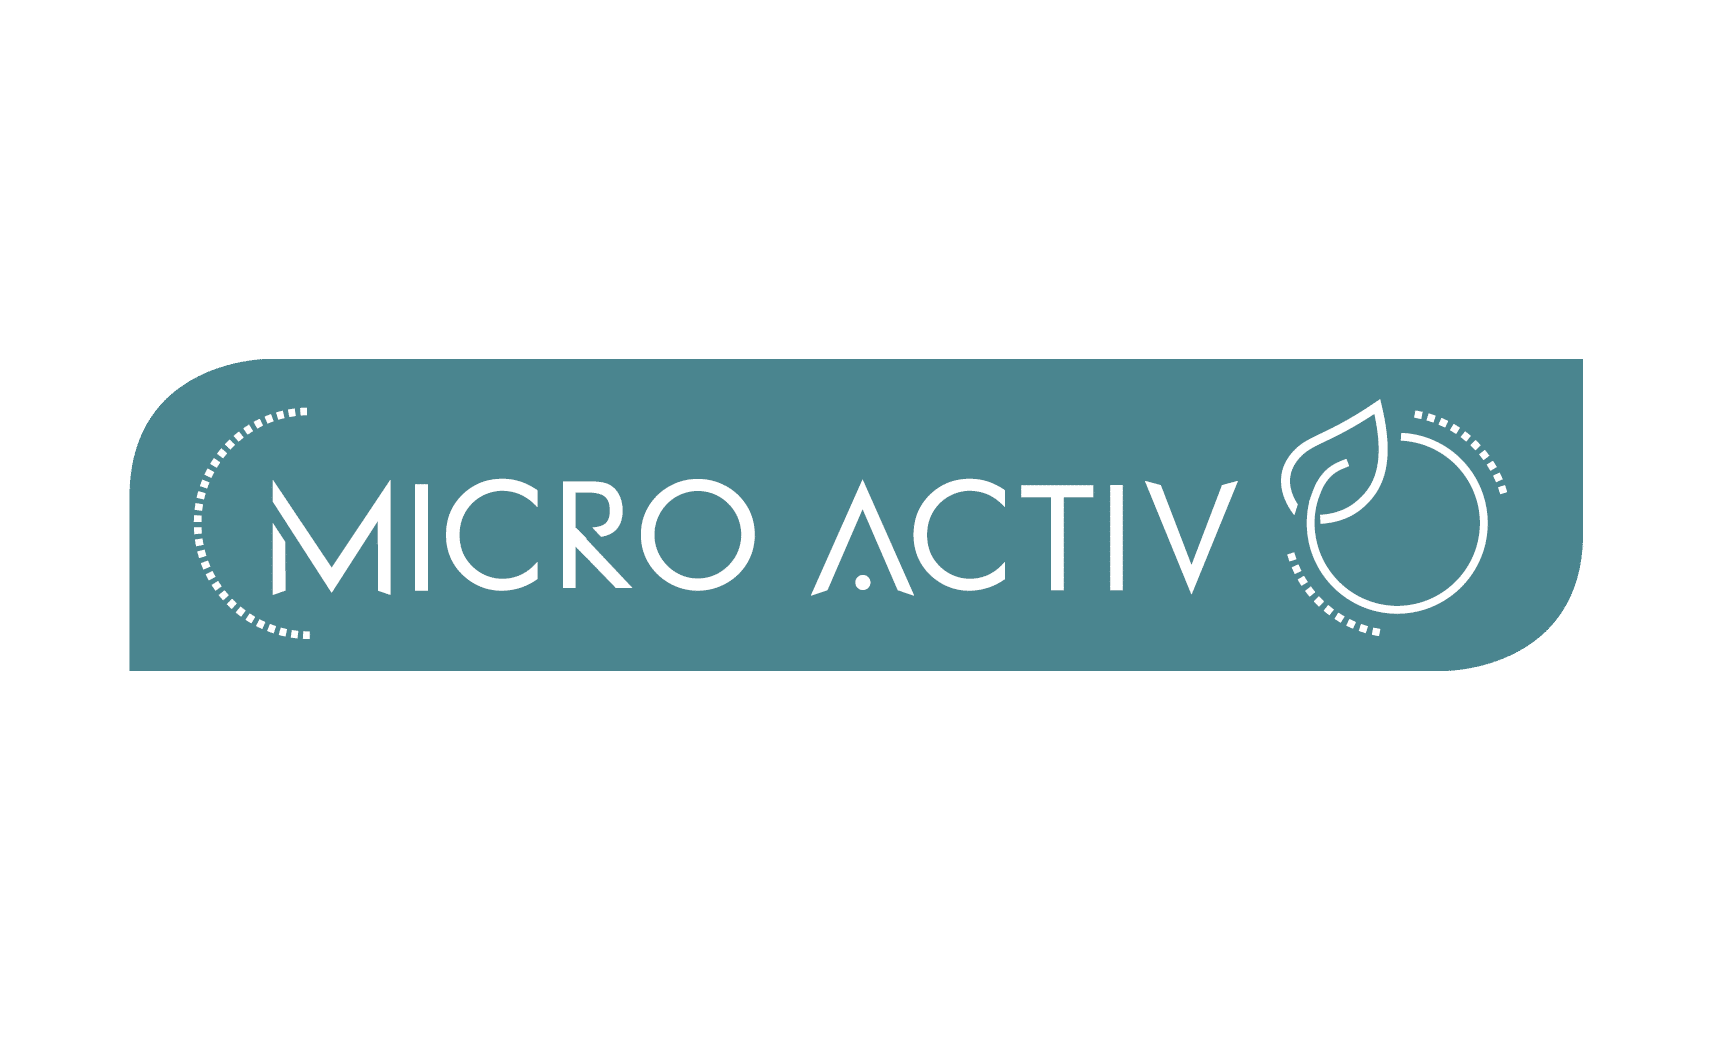 Micro Activ I